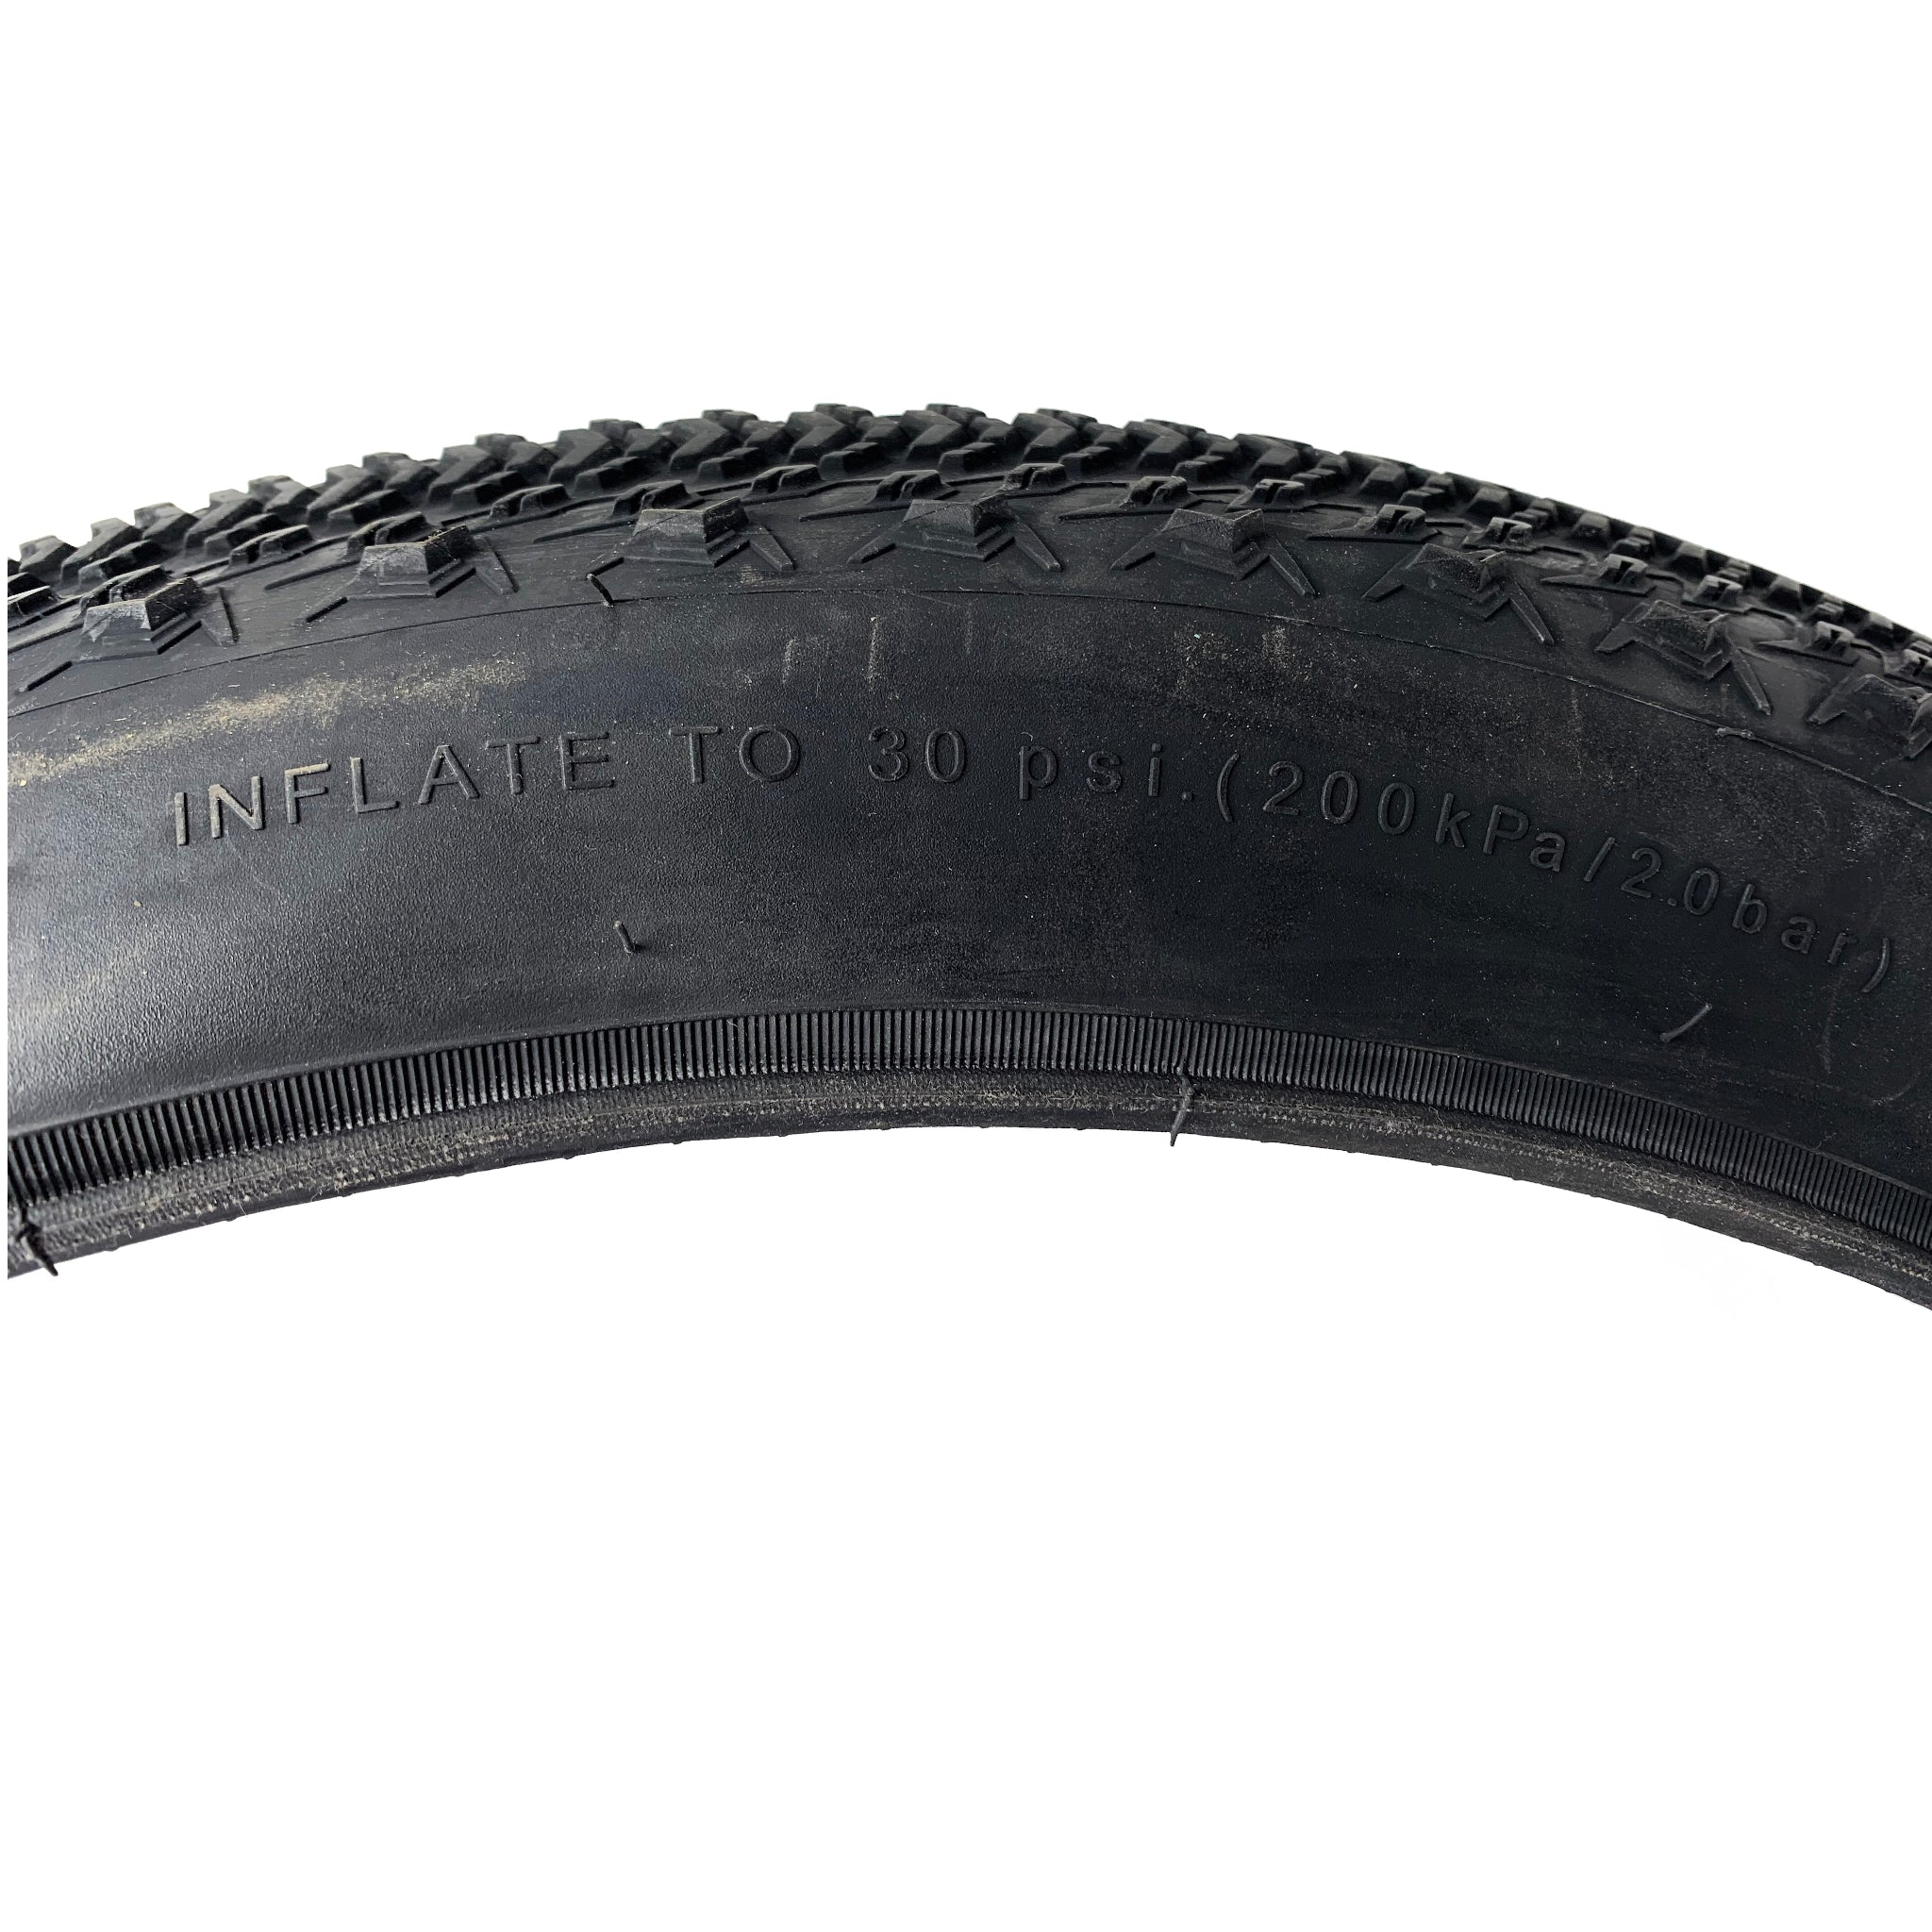 CST Megatane 26x4.0 Fat Bike Tire